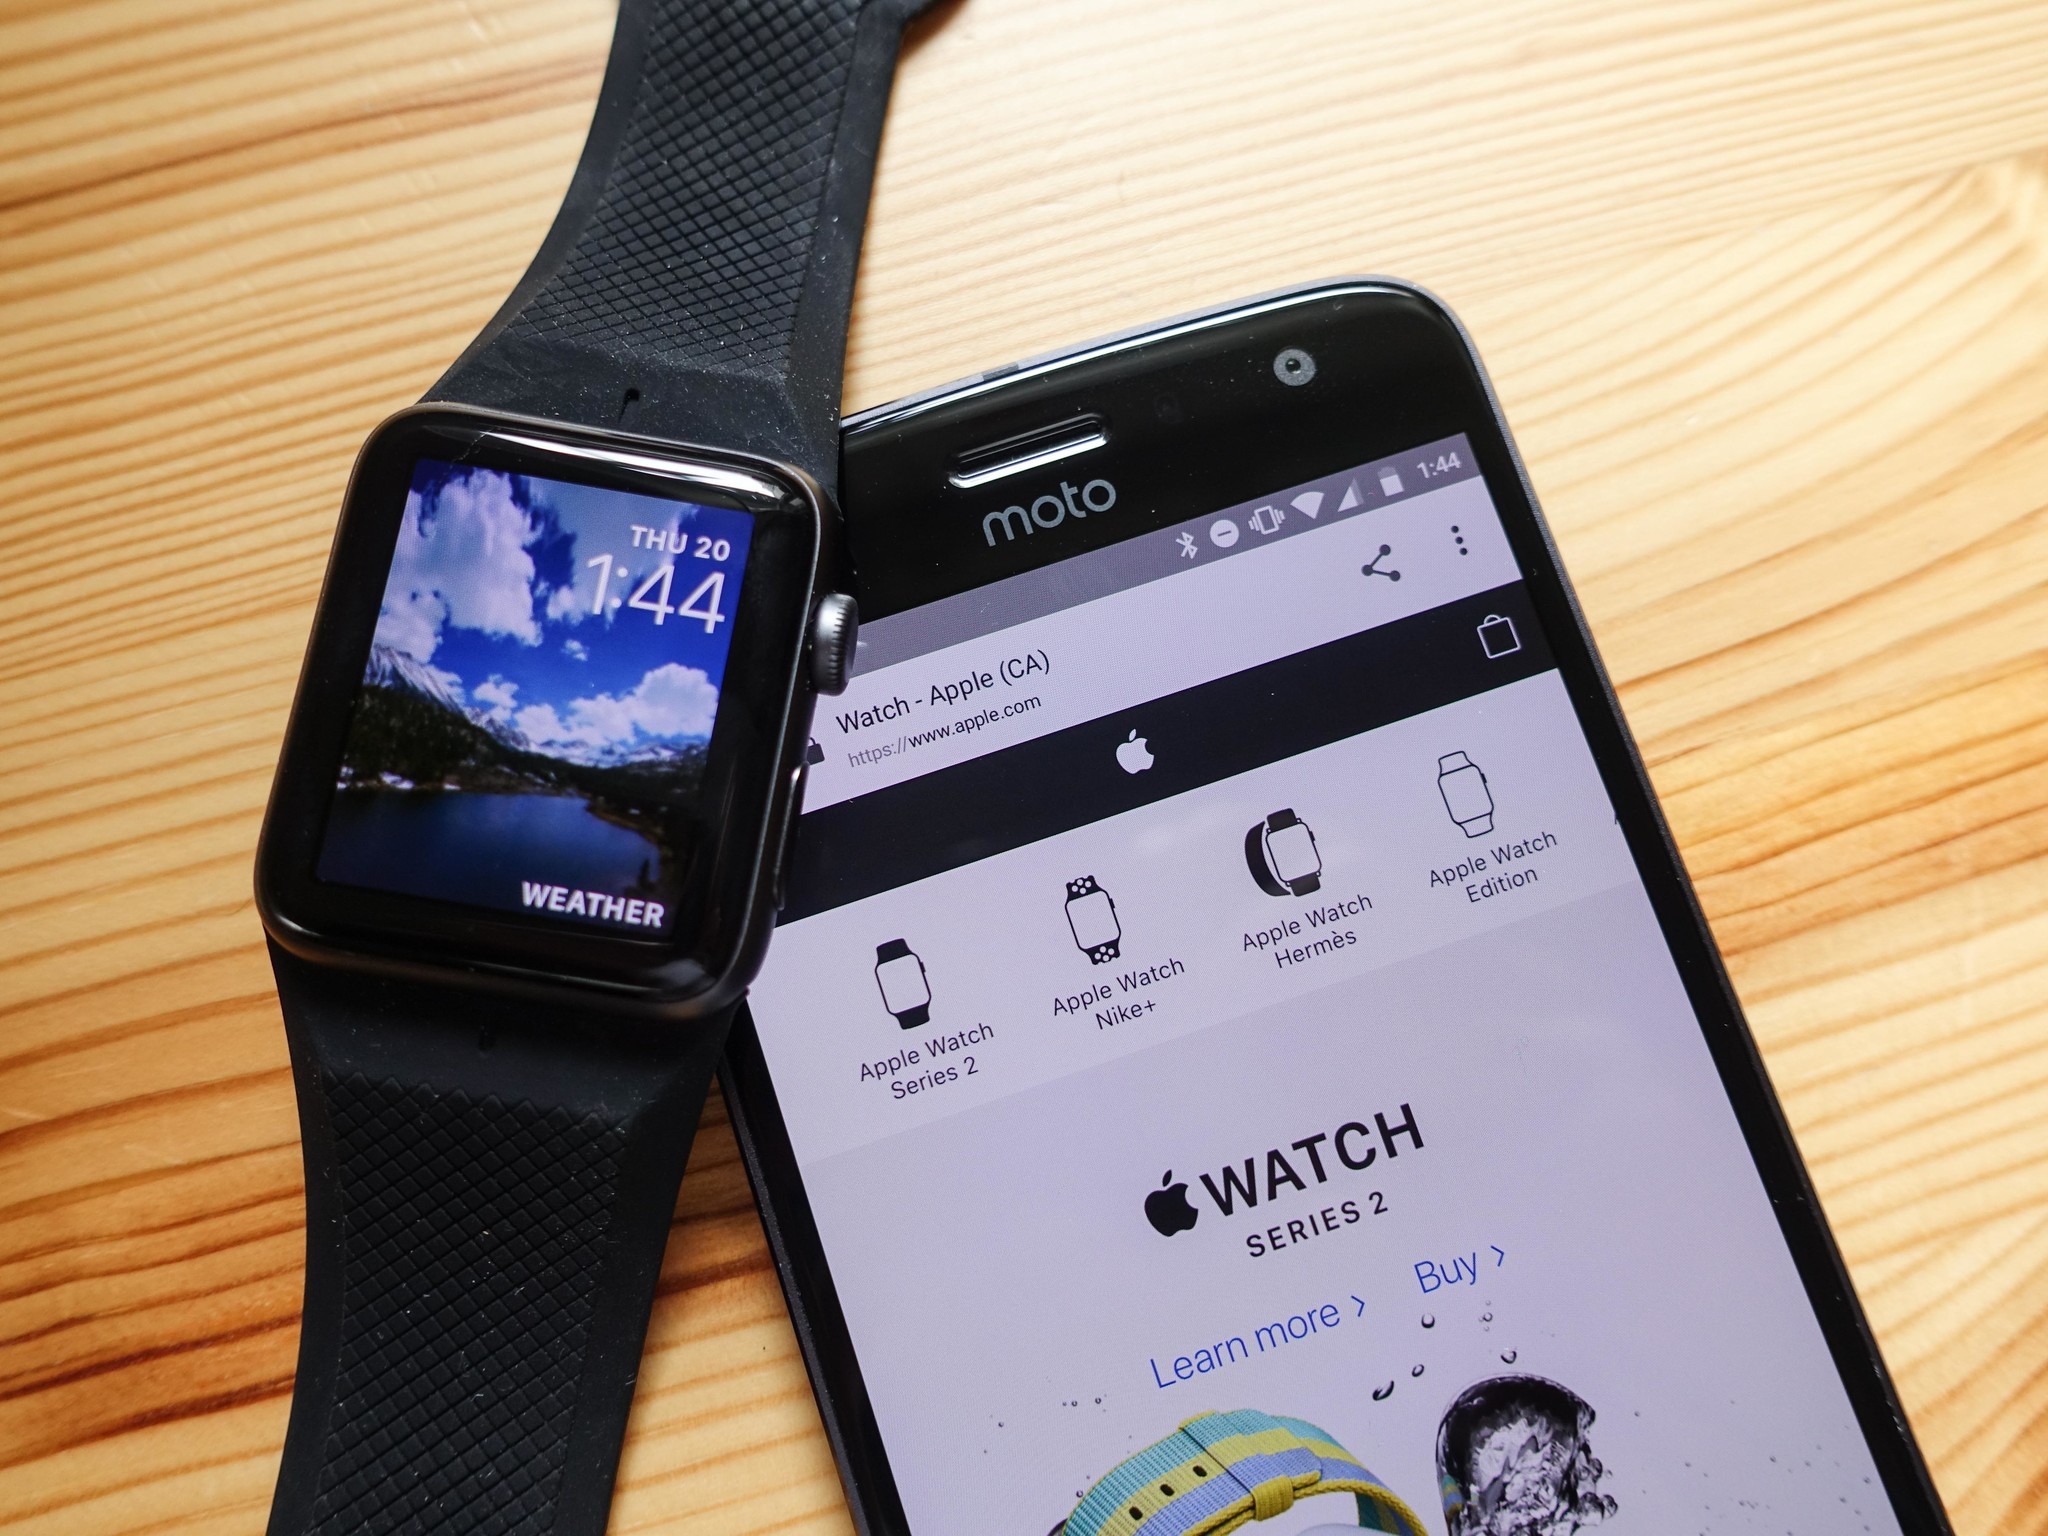 Watch подключить к андроид можно. Apple watch подключить к андроид. Эппл вотч подключаются к андроиду. Подключаются ли Apple watch к Android. АПЛ вотч подключить к андроид.